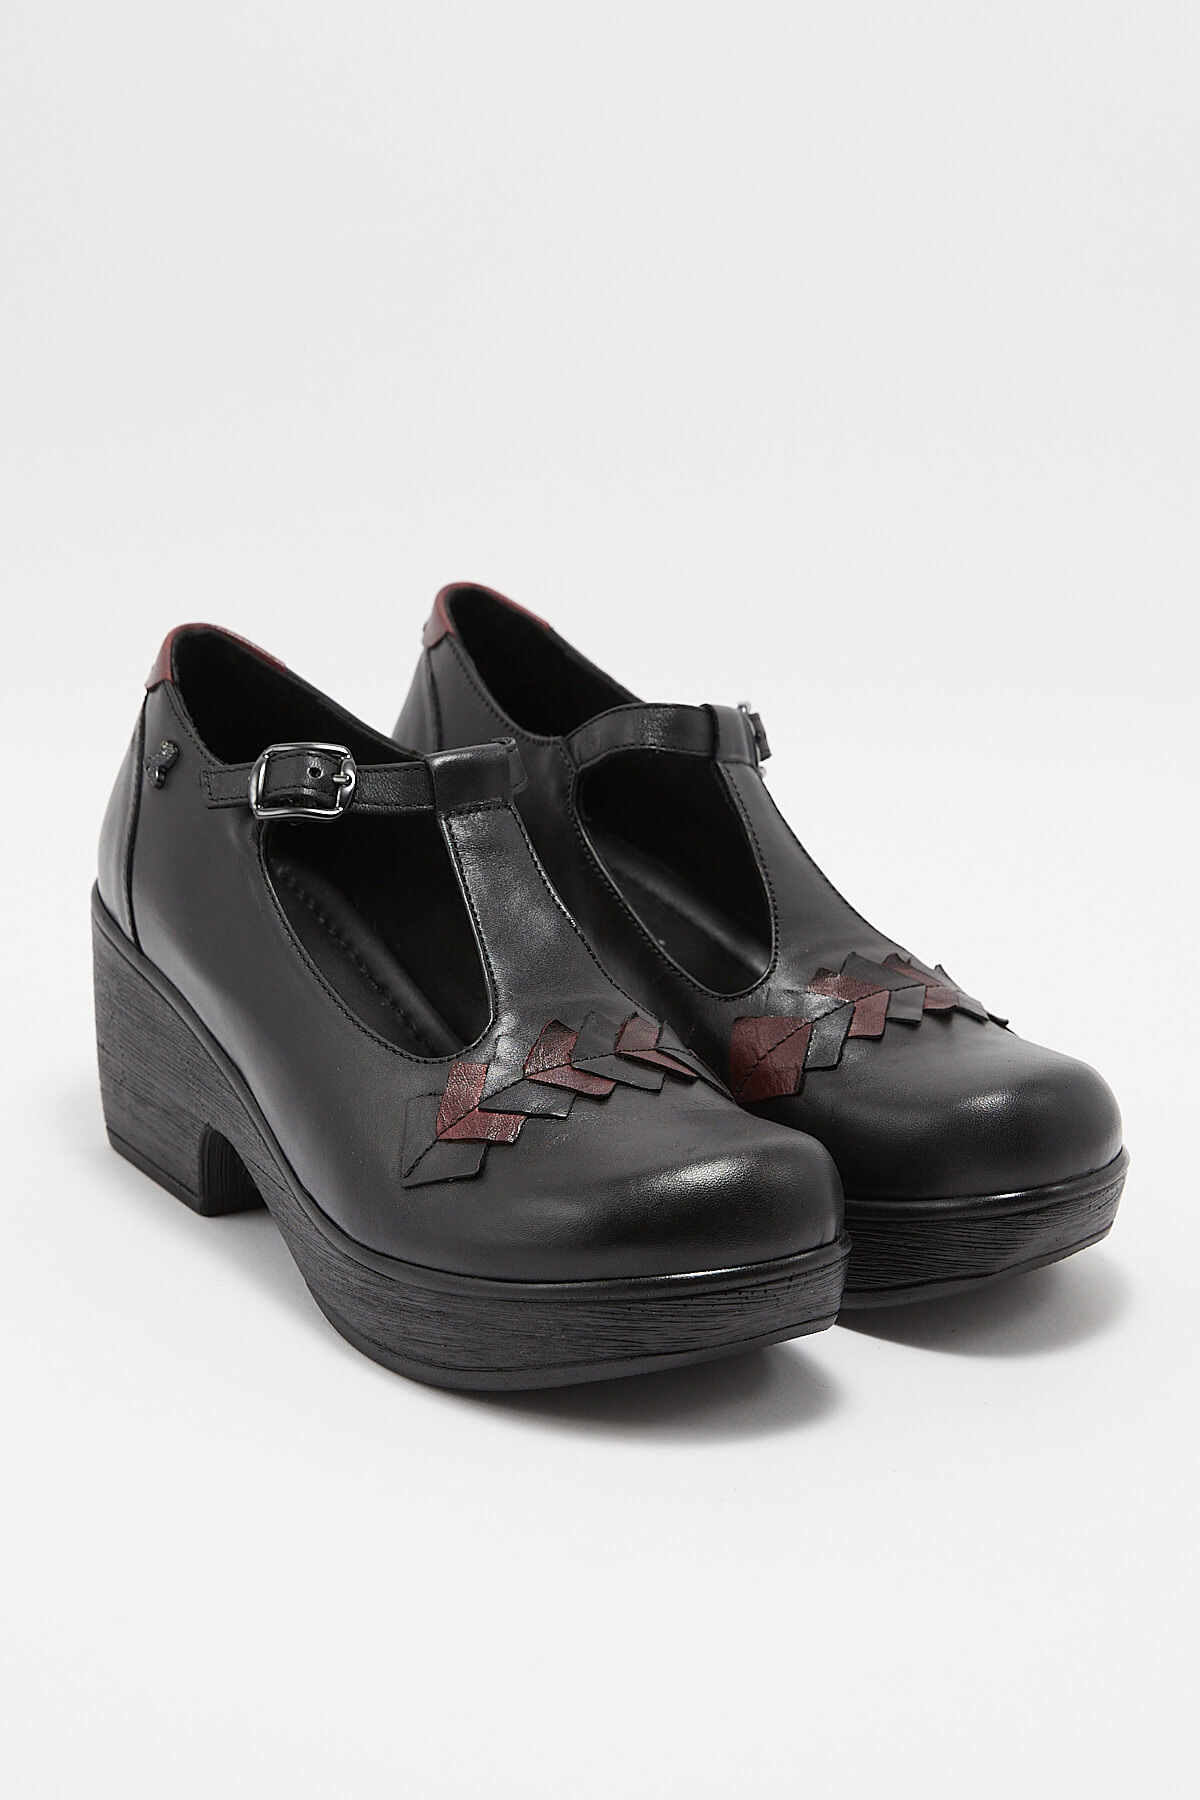 Kadın Apartman Topuk Deri Ayakkabı Siyah 1912511Y - Thumbnail